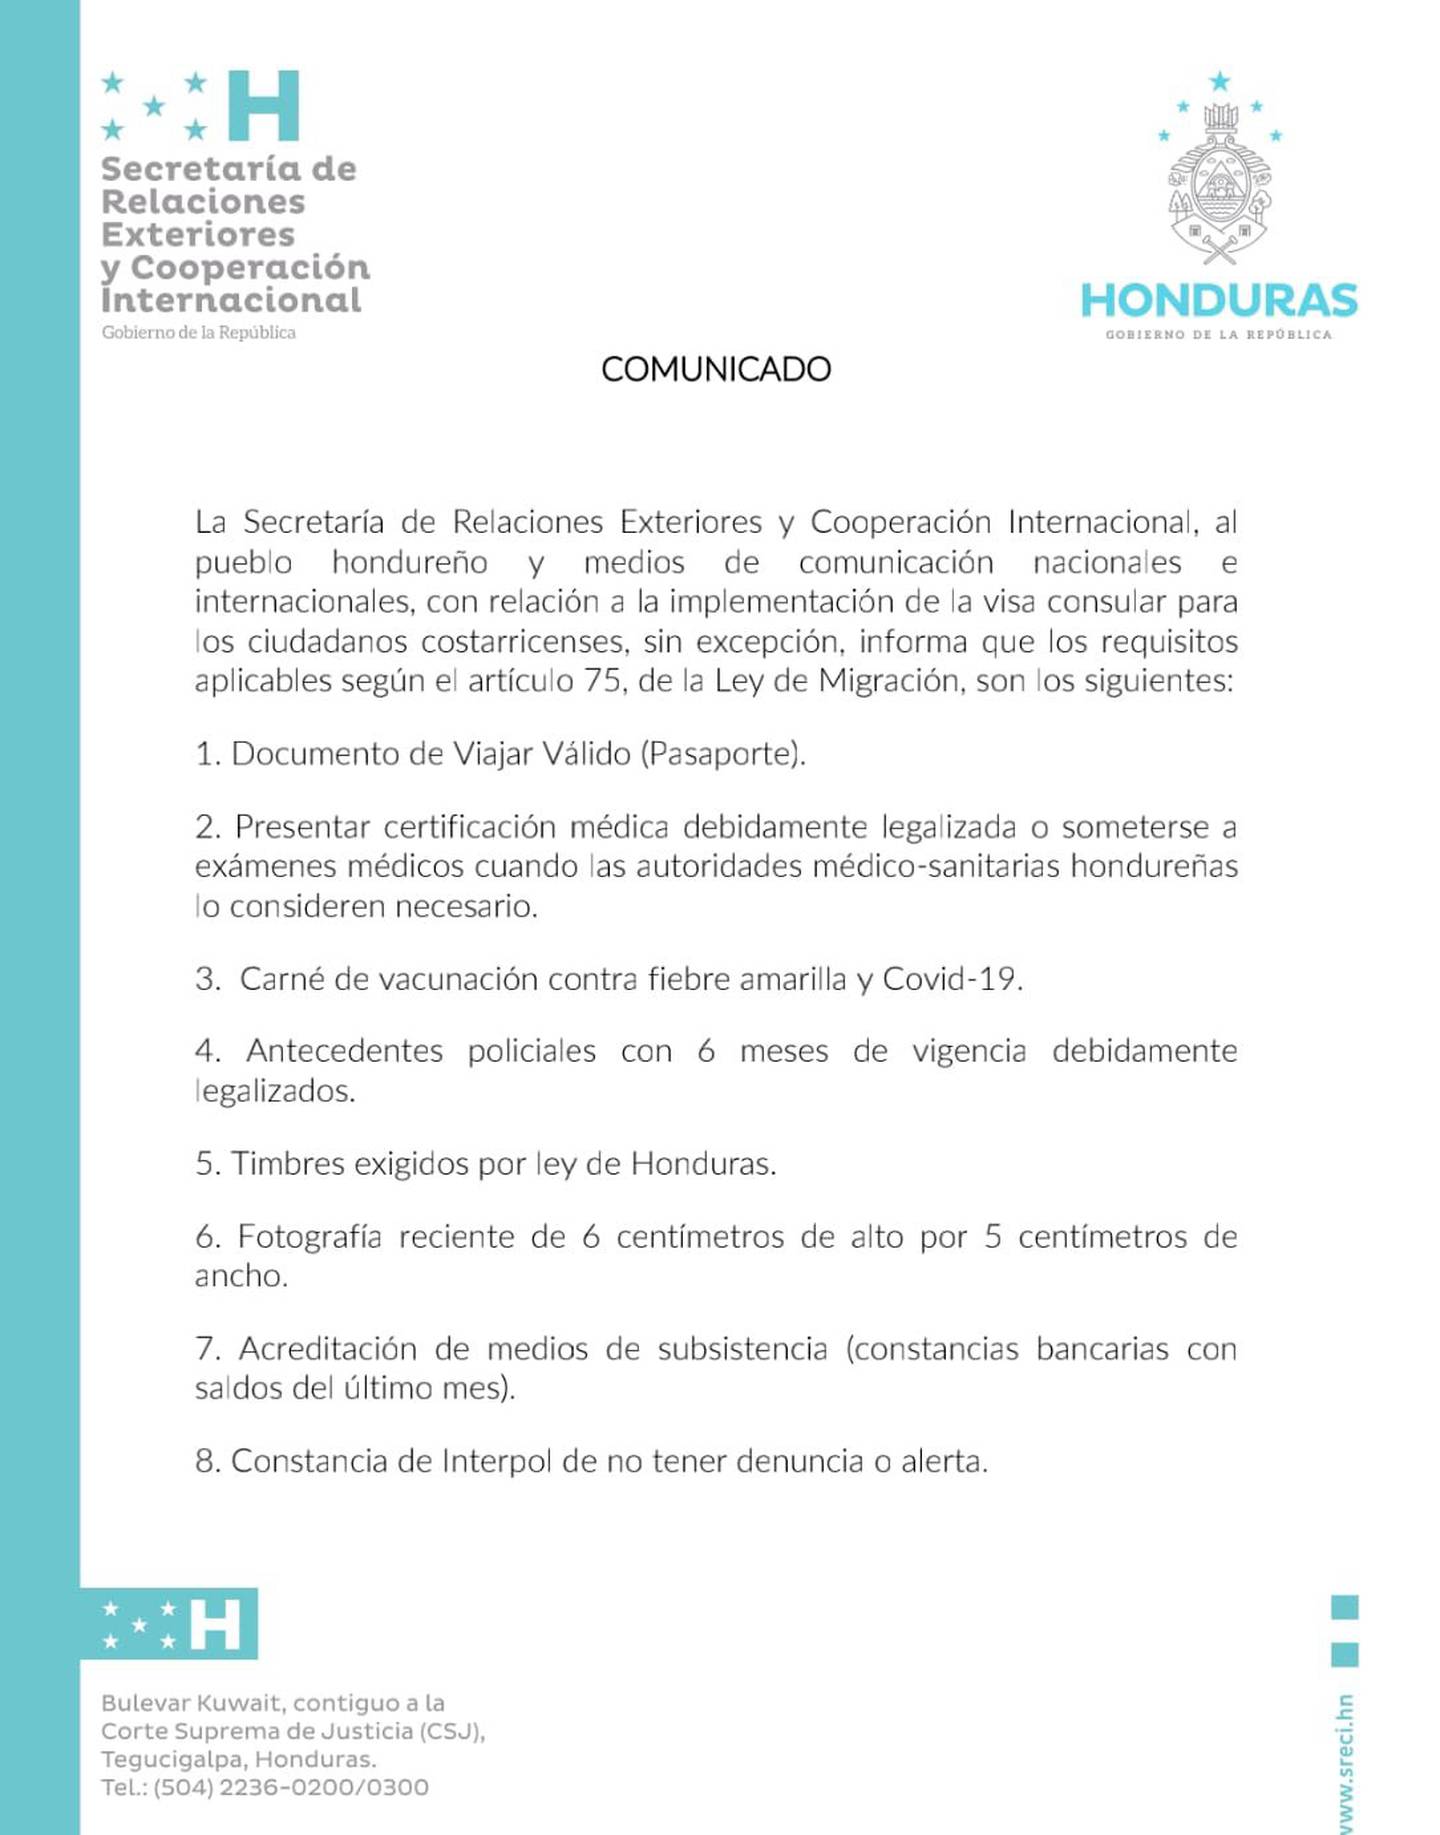 Requisitos para visa consular de ticos para entrar a Honduras.